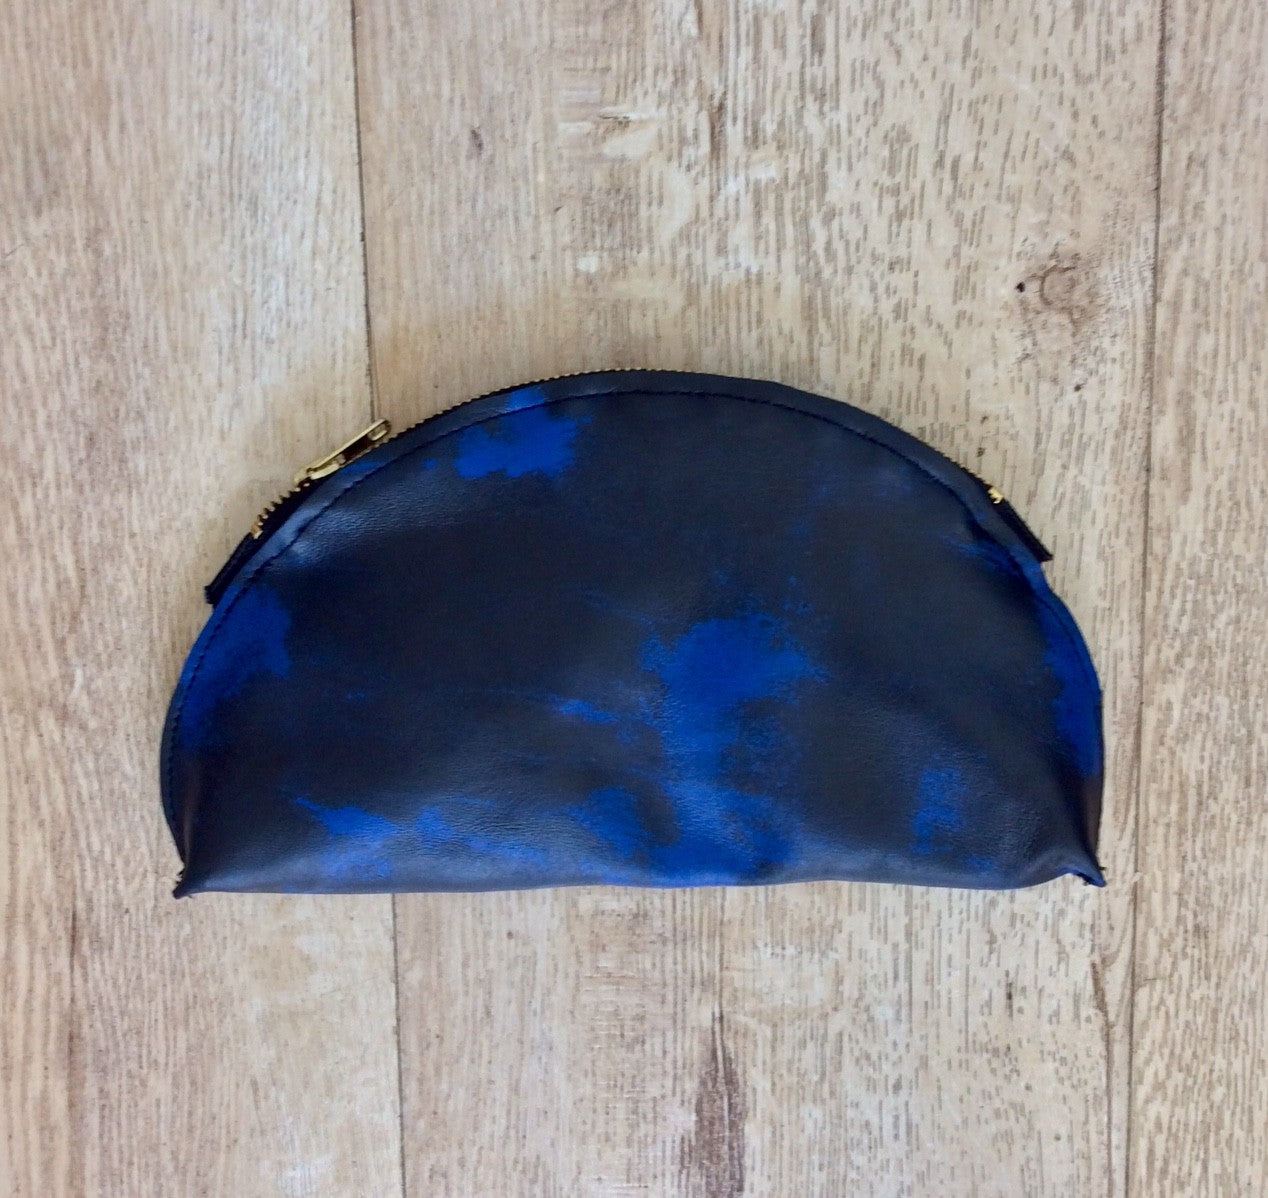 Royal blue & black lamb skin make up bag with gold metal zipper